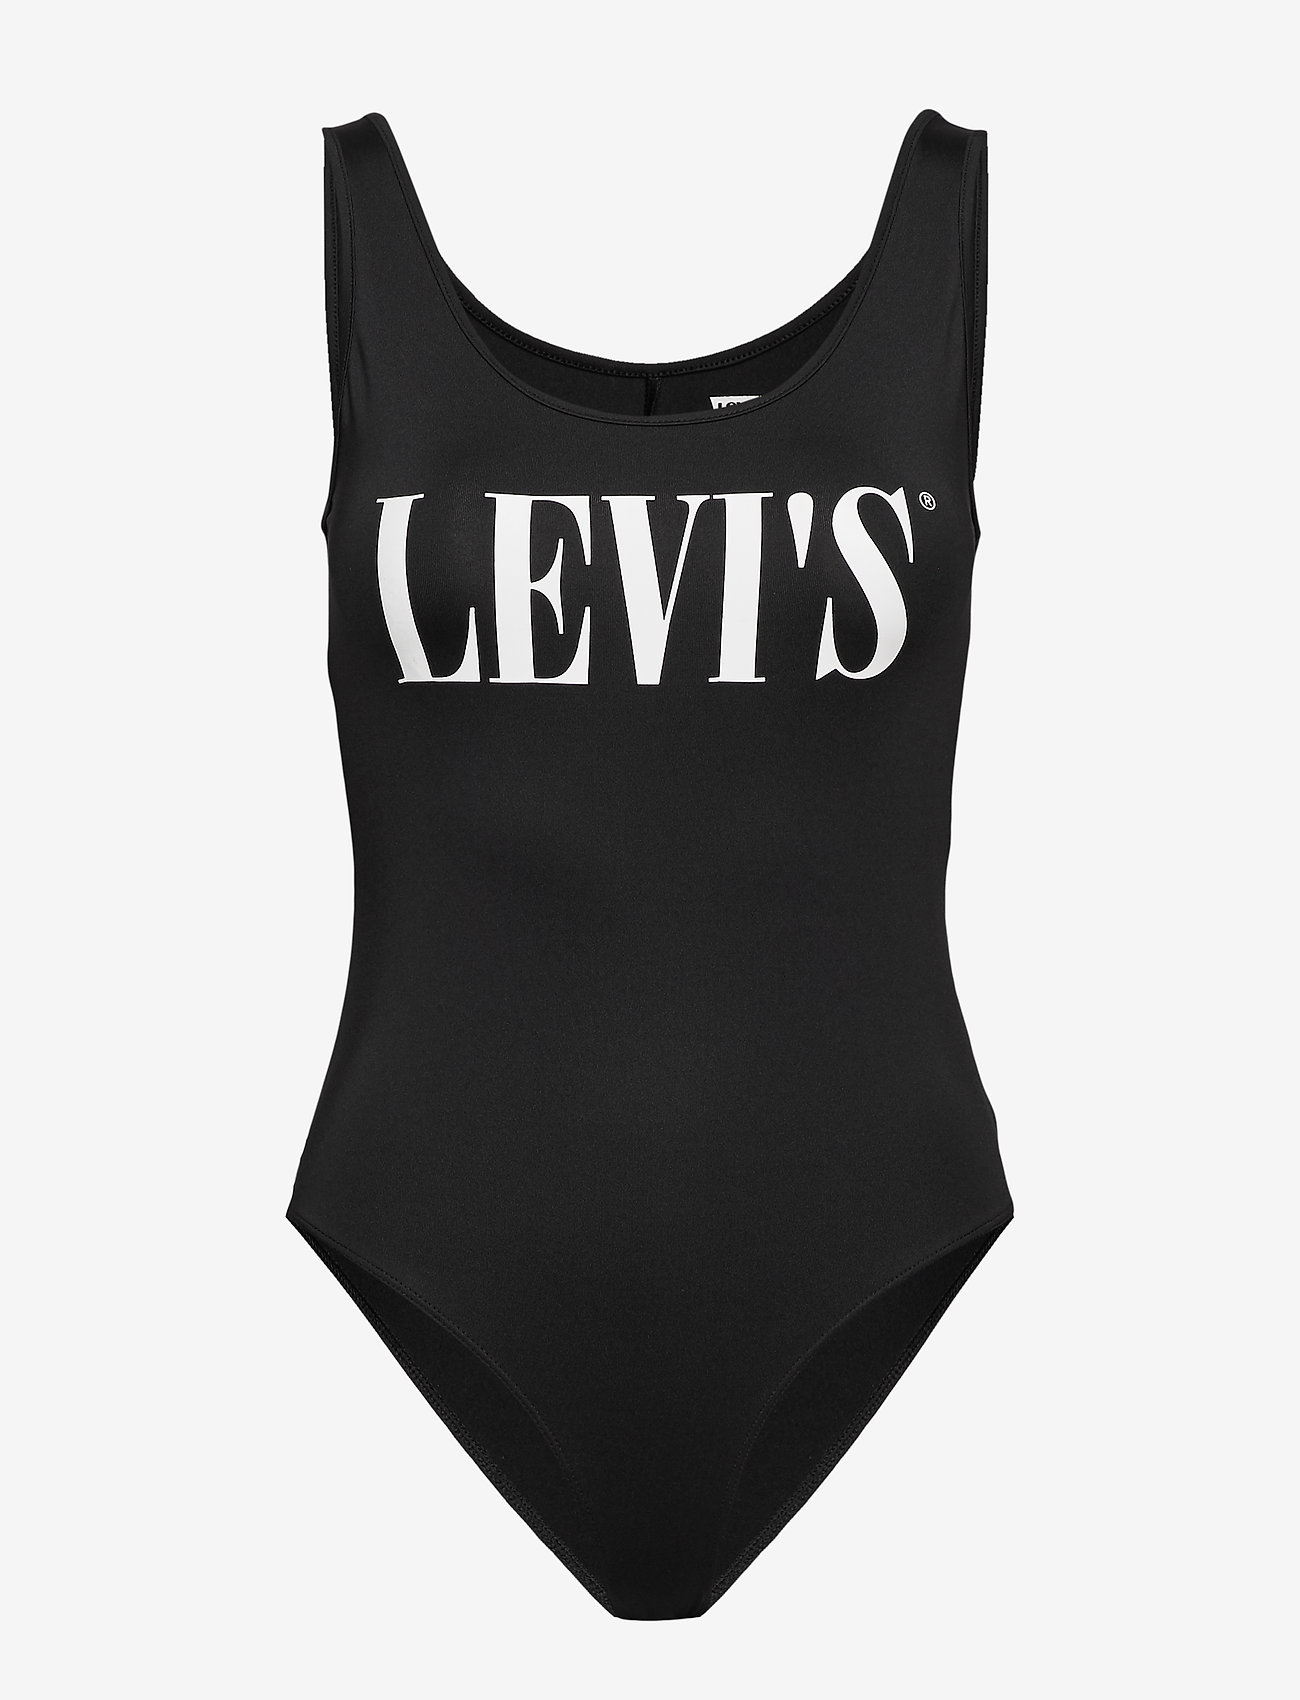 levis graphic bodysuit